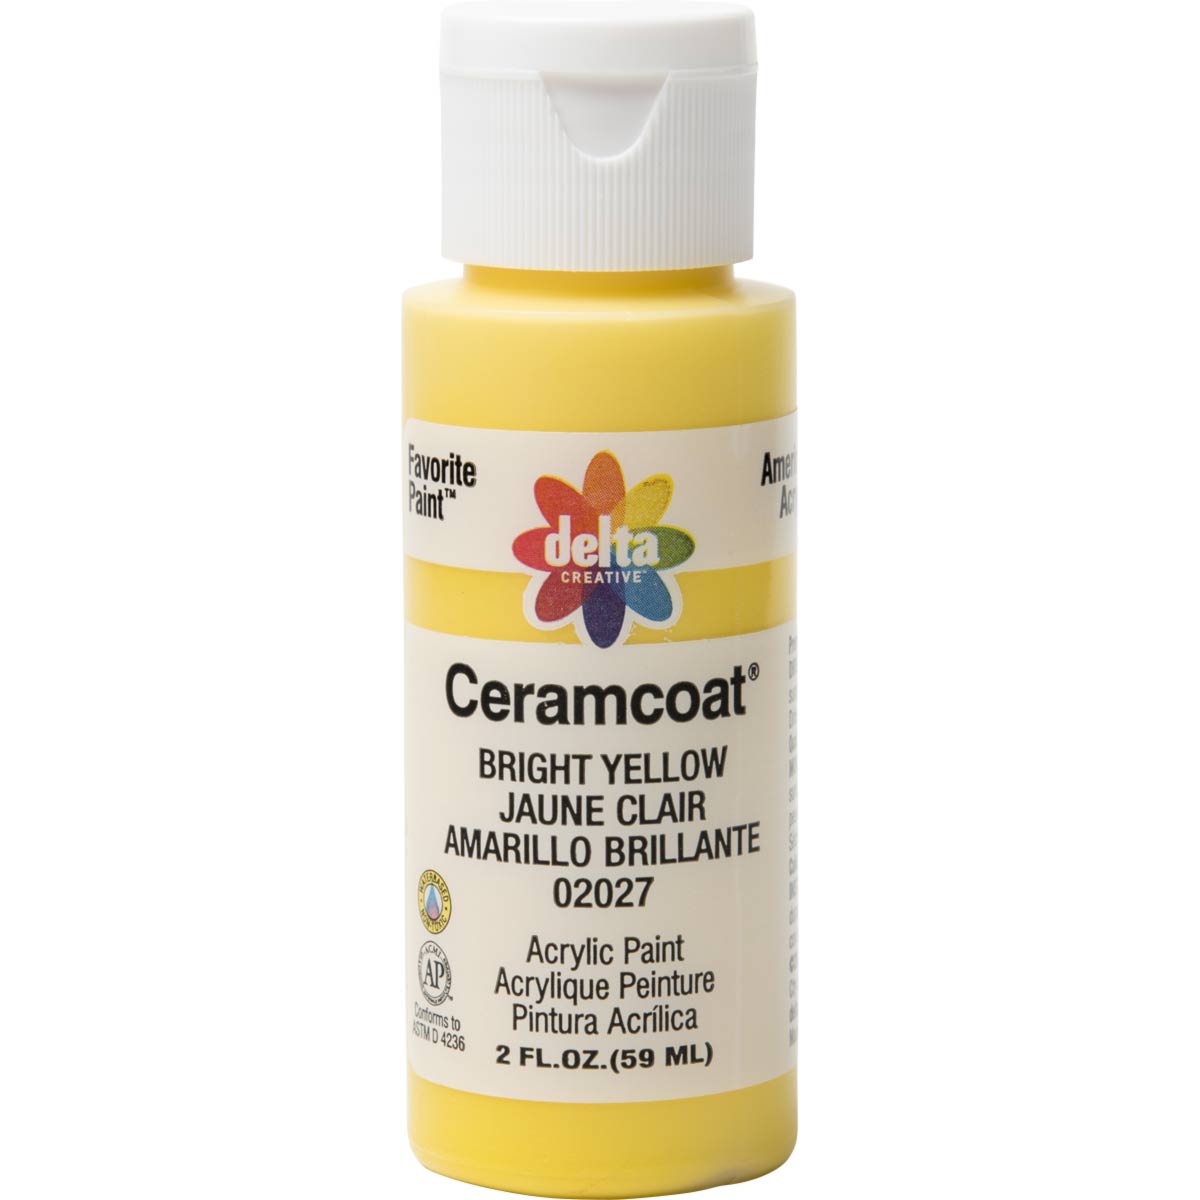 Delta Ceramcoat Acrylic Paint - Bright Yellow, 2 oz. - 020270202W